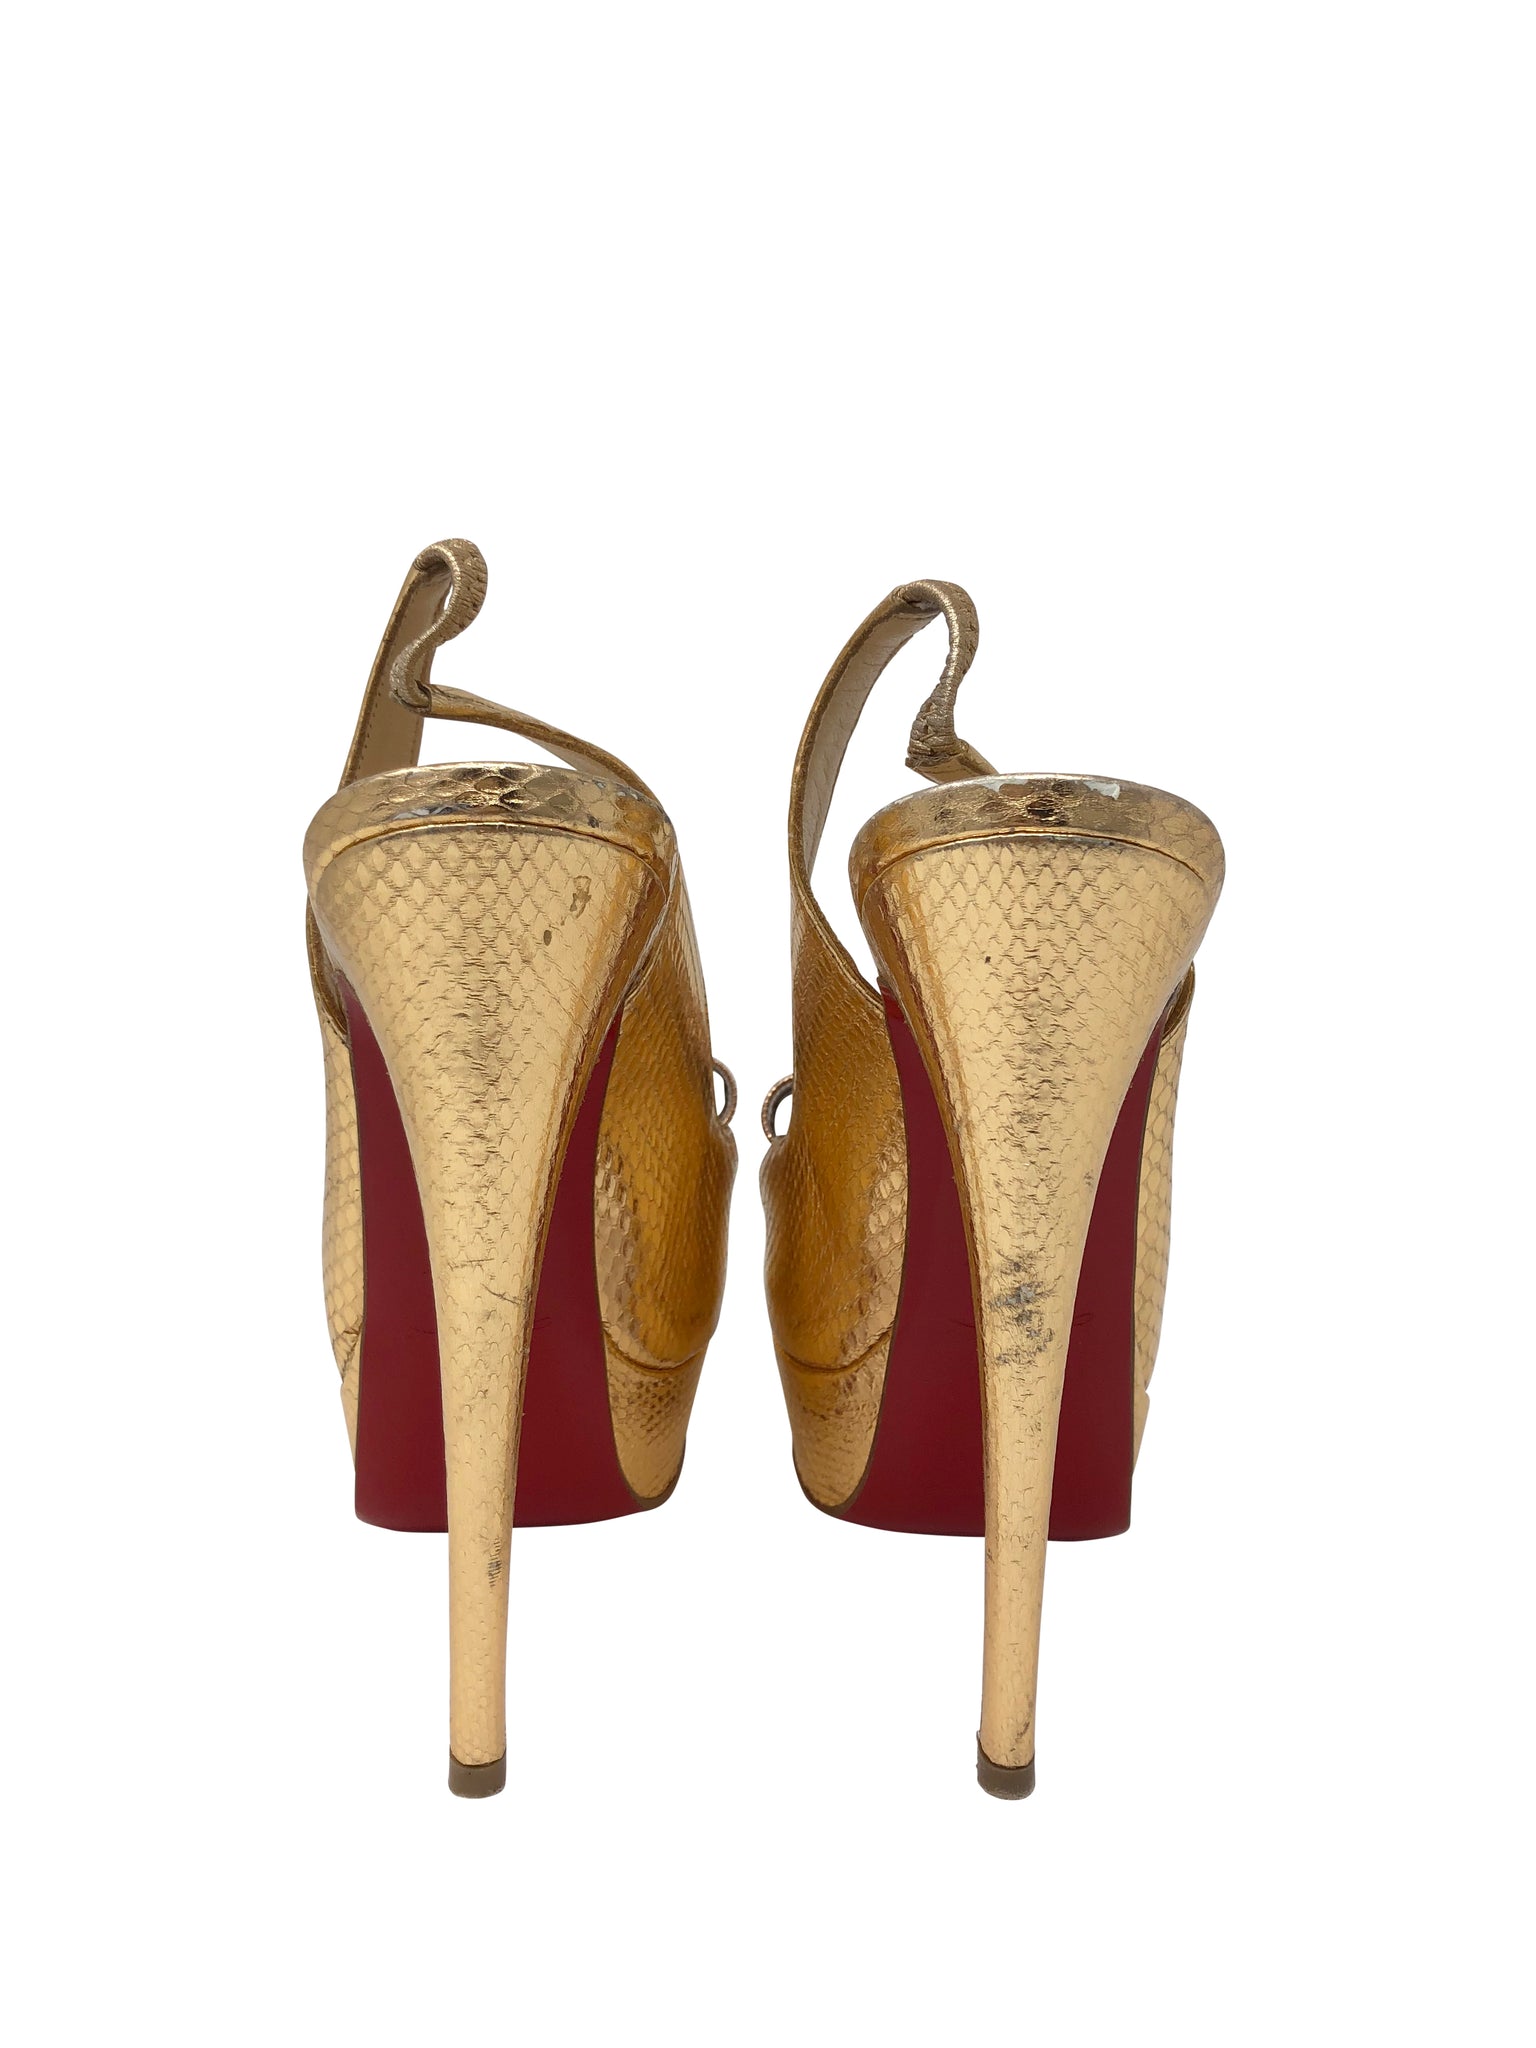 falskhed Glorious Arthur Christian Louboutin Heels Gold snakeskin with Bow Size 36 – Sacdelux